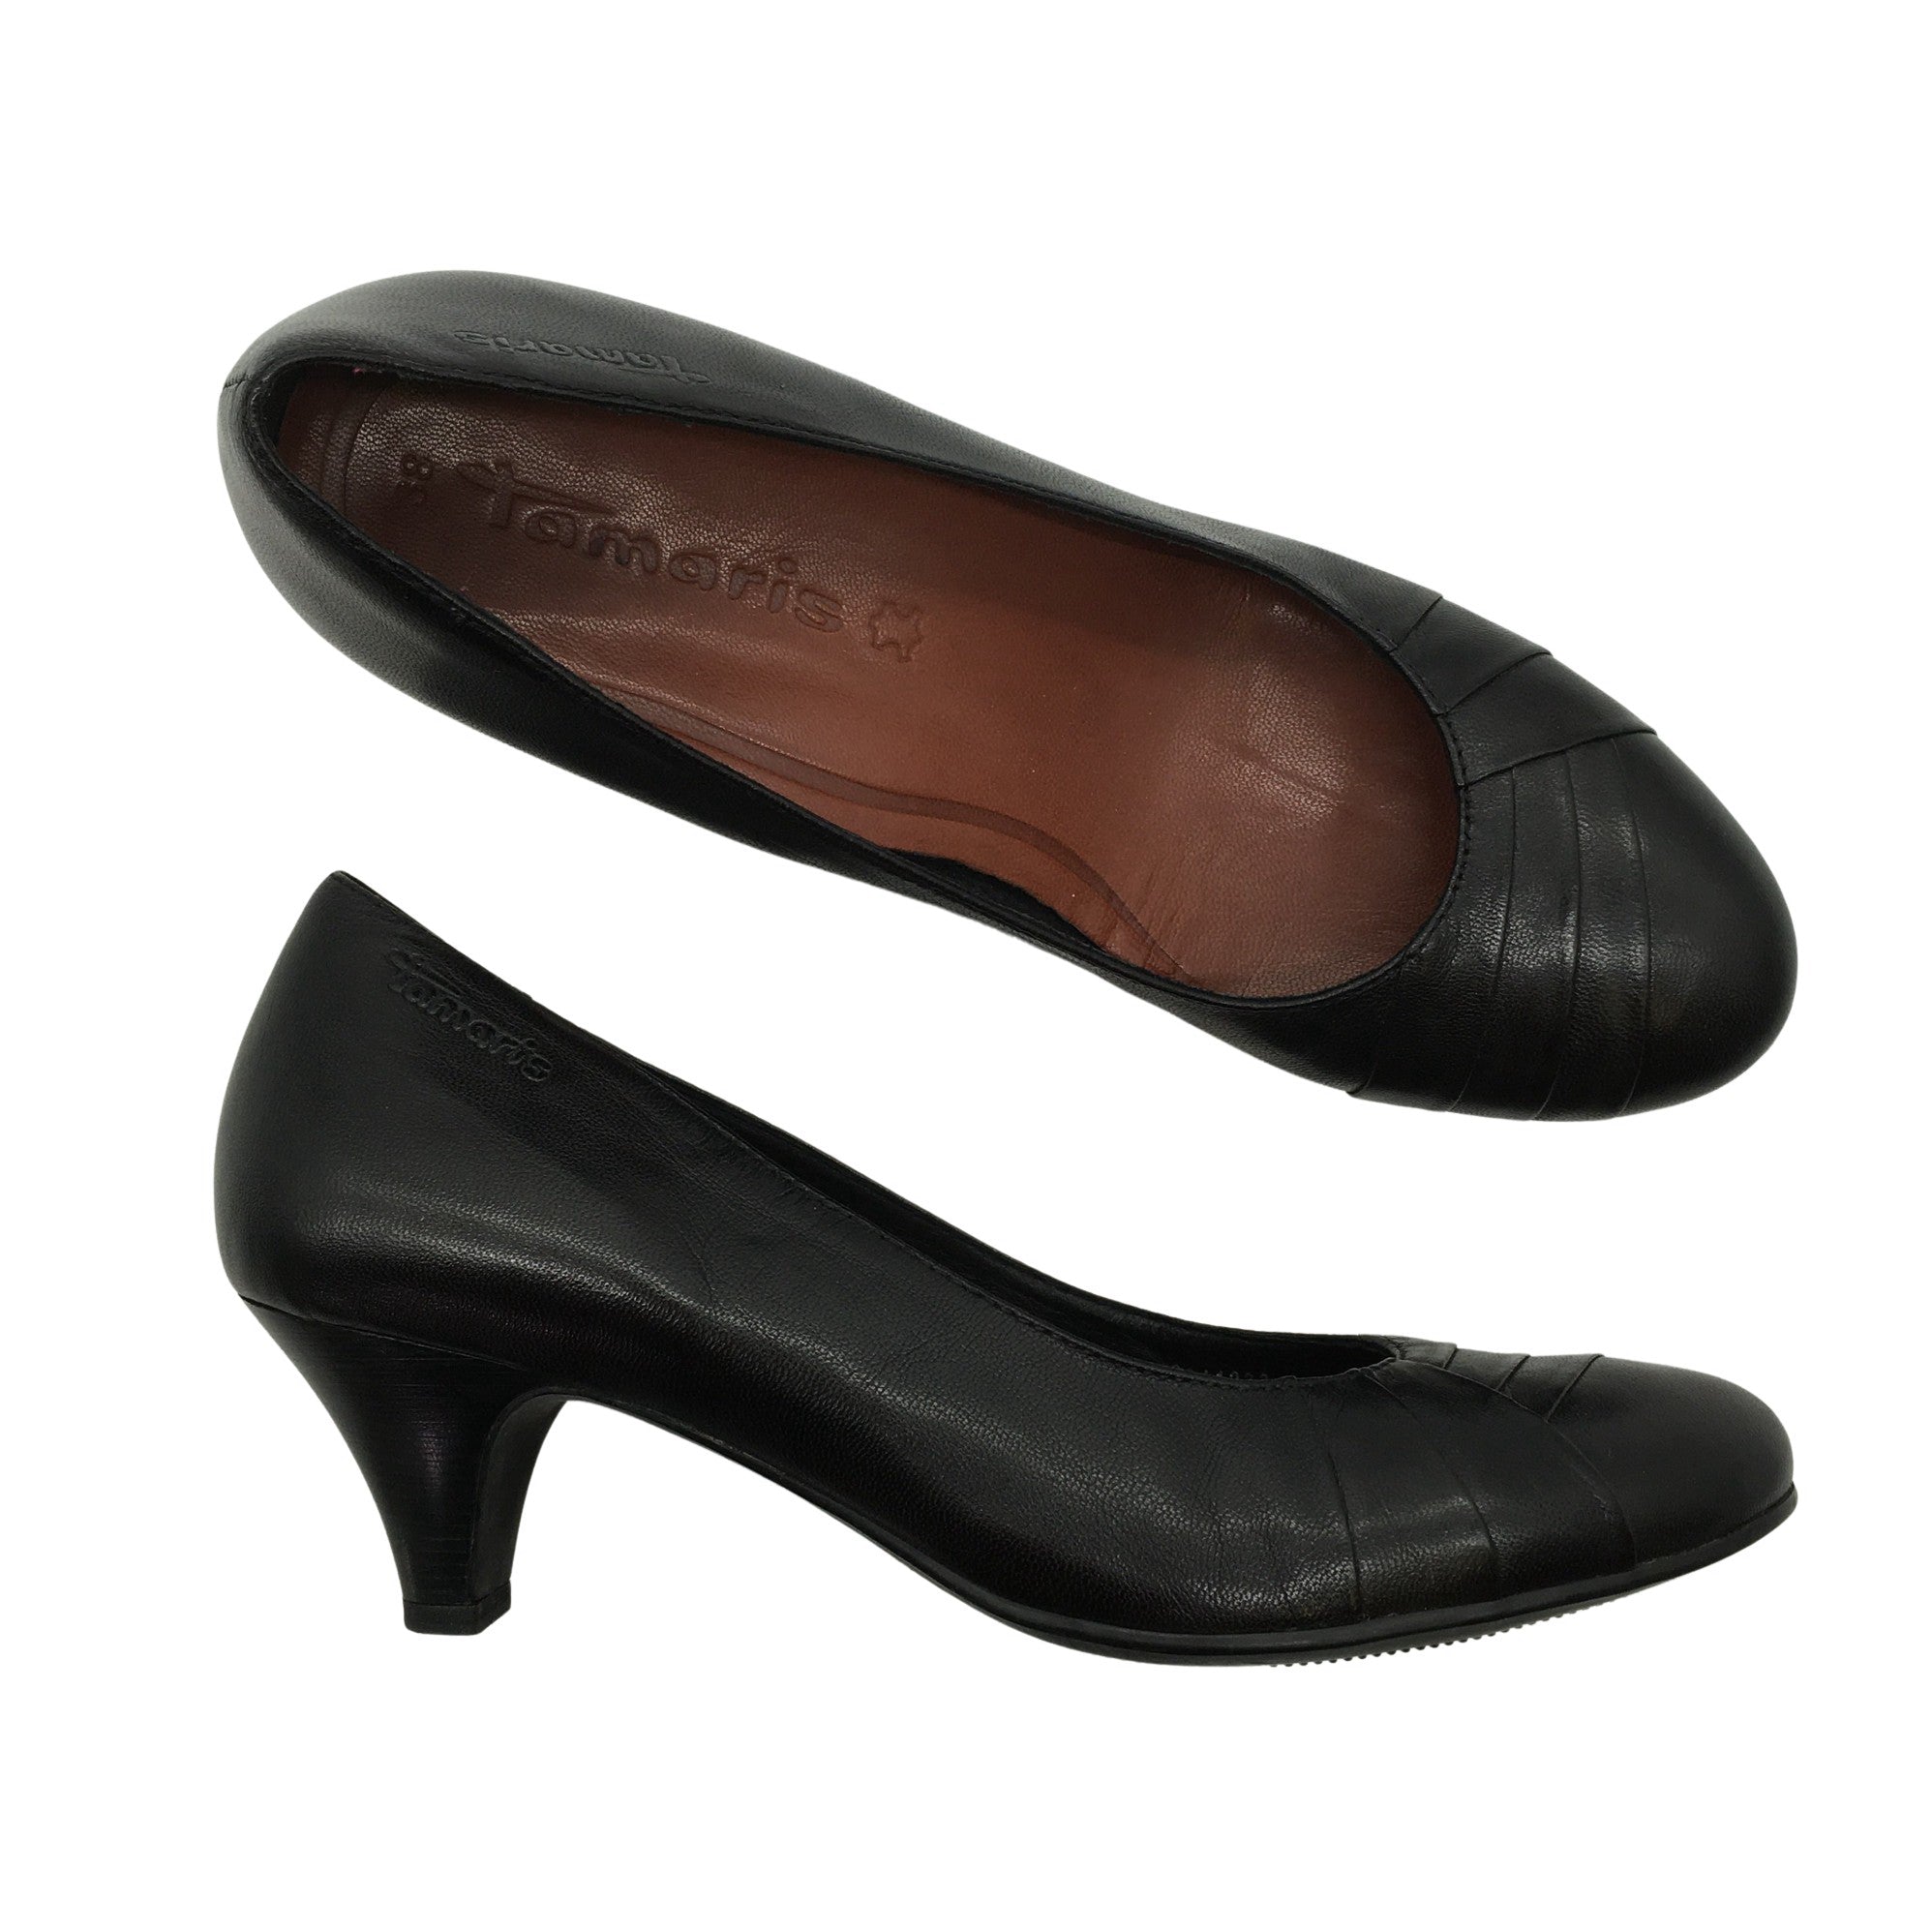 Women's Tamaris High heels, size 38 (Black) Emmy